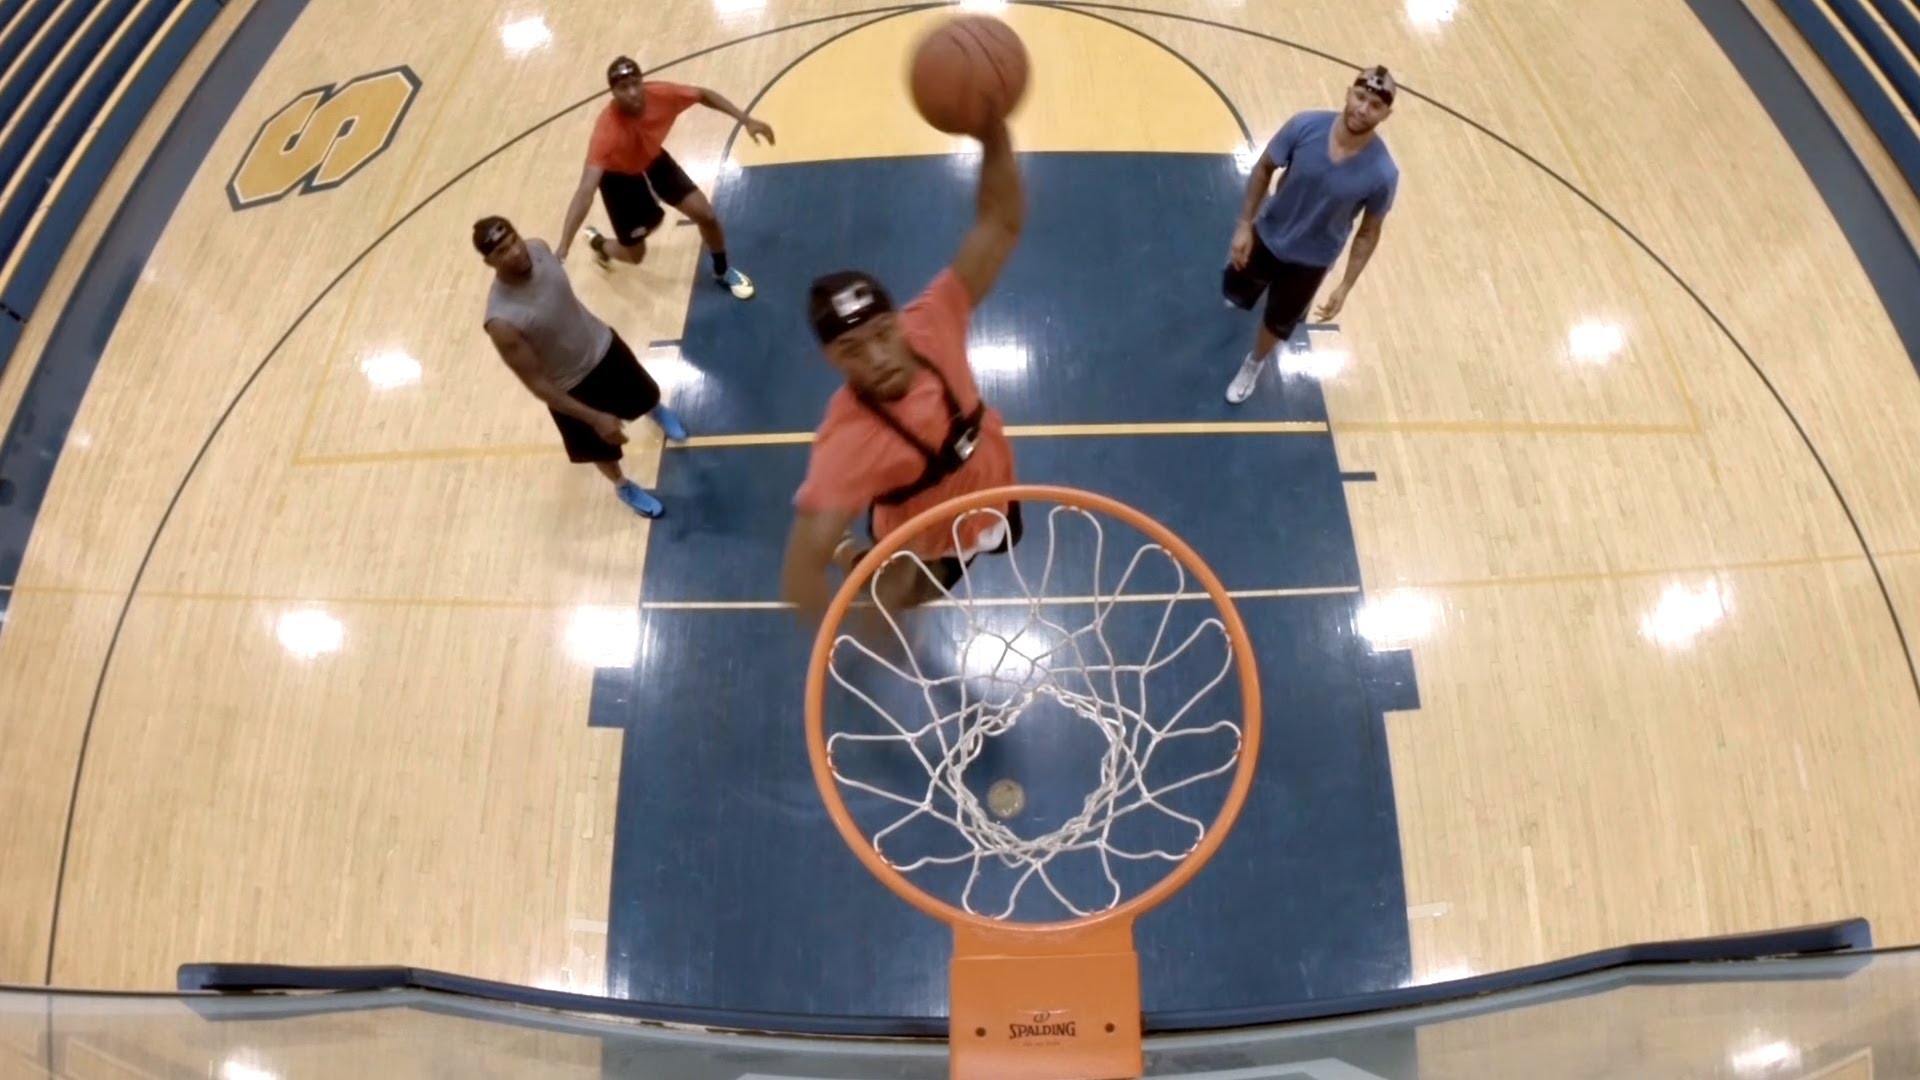 GoPro: Why Play Basketball? (1st Person Camera View) - Twenty4Seven Magazine